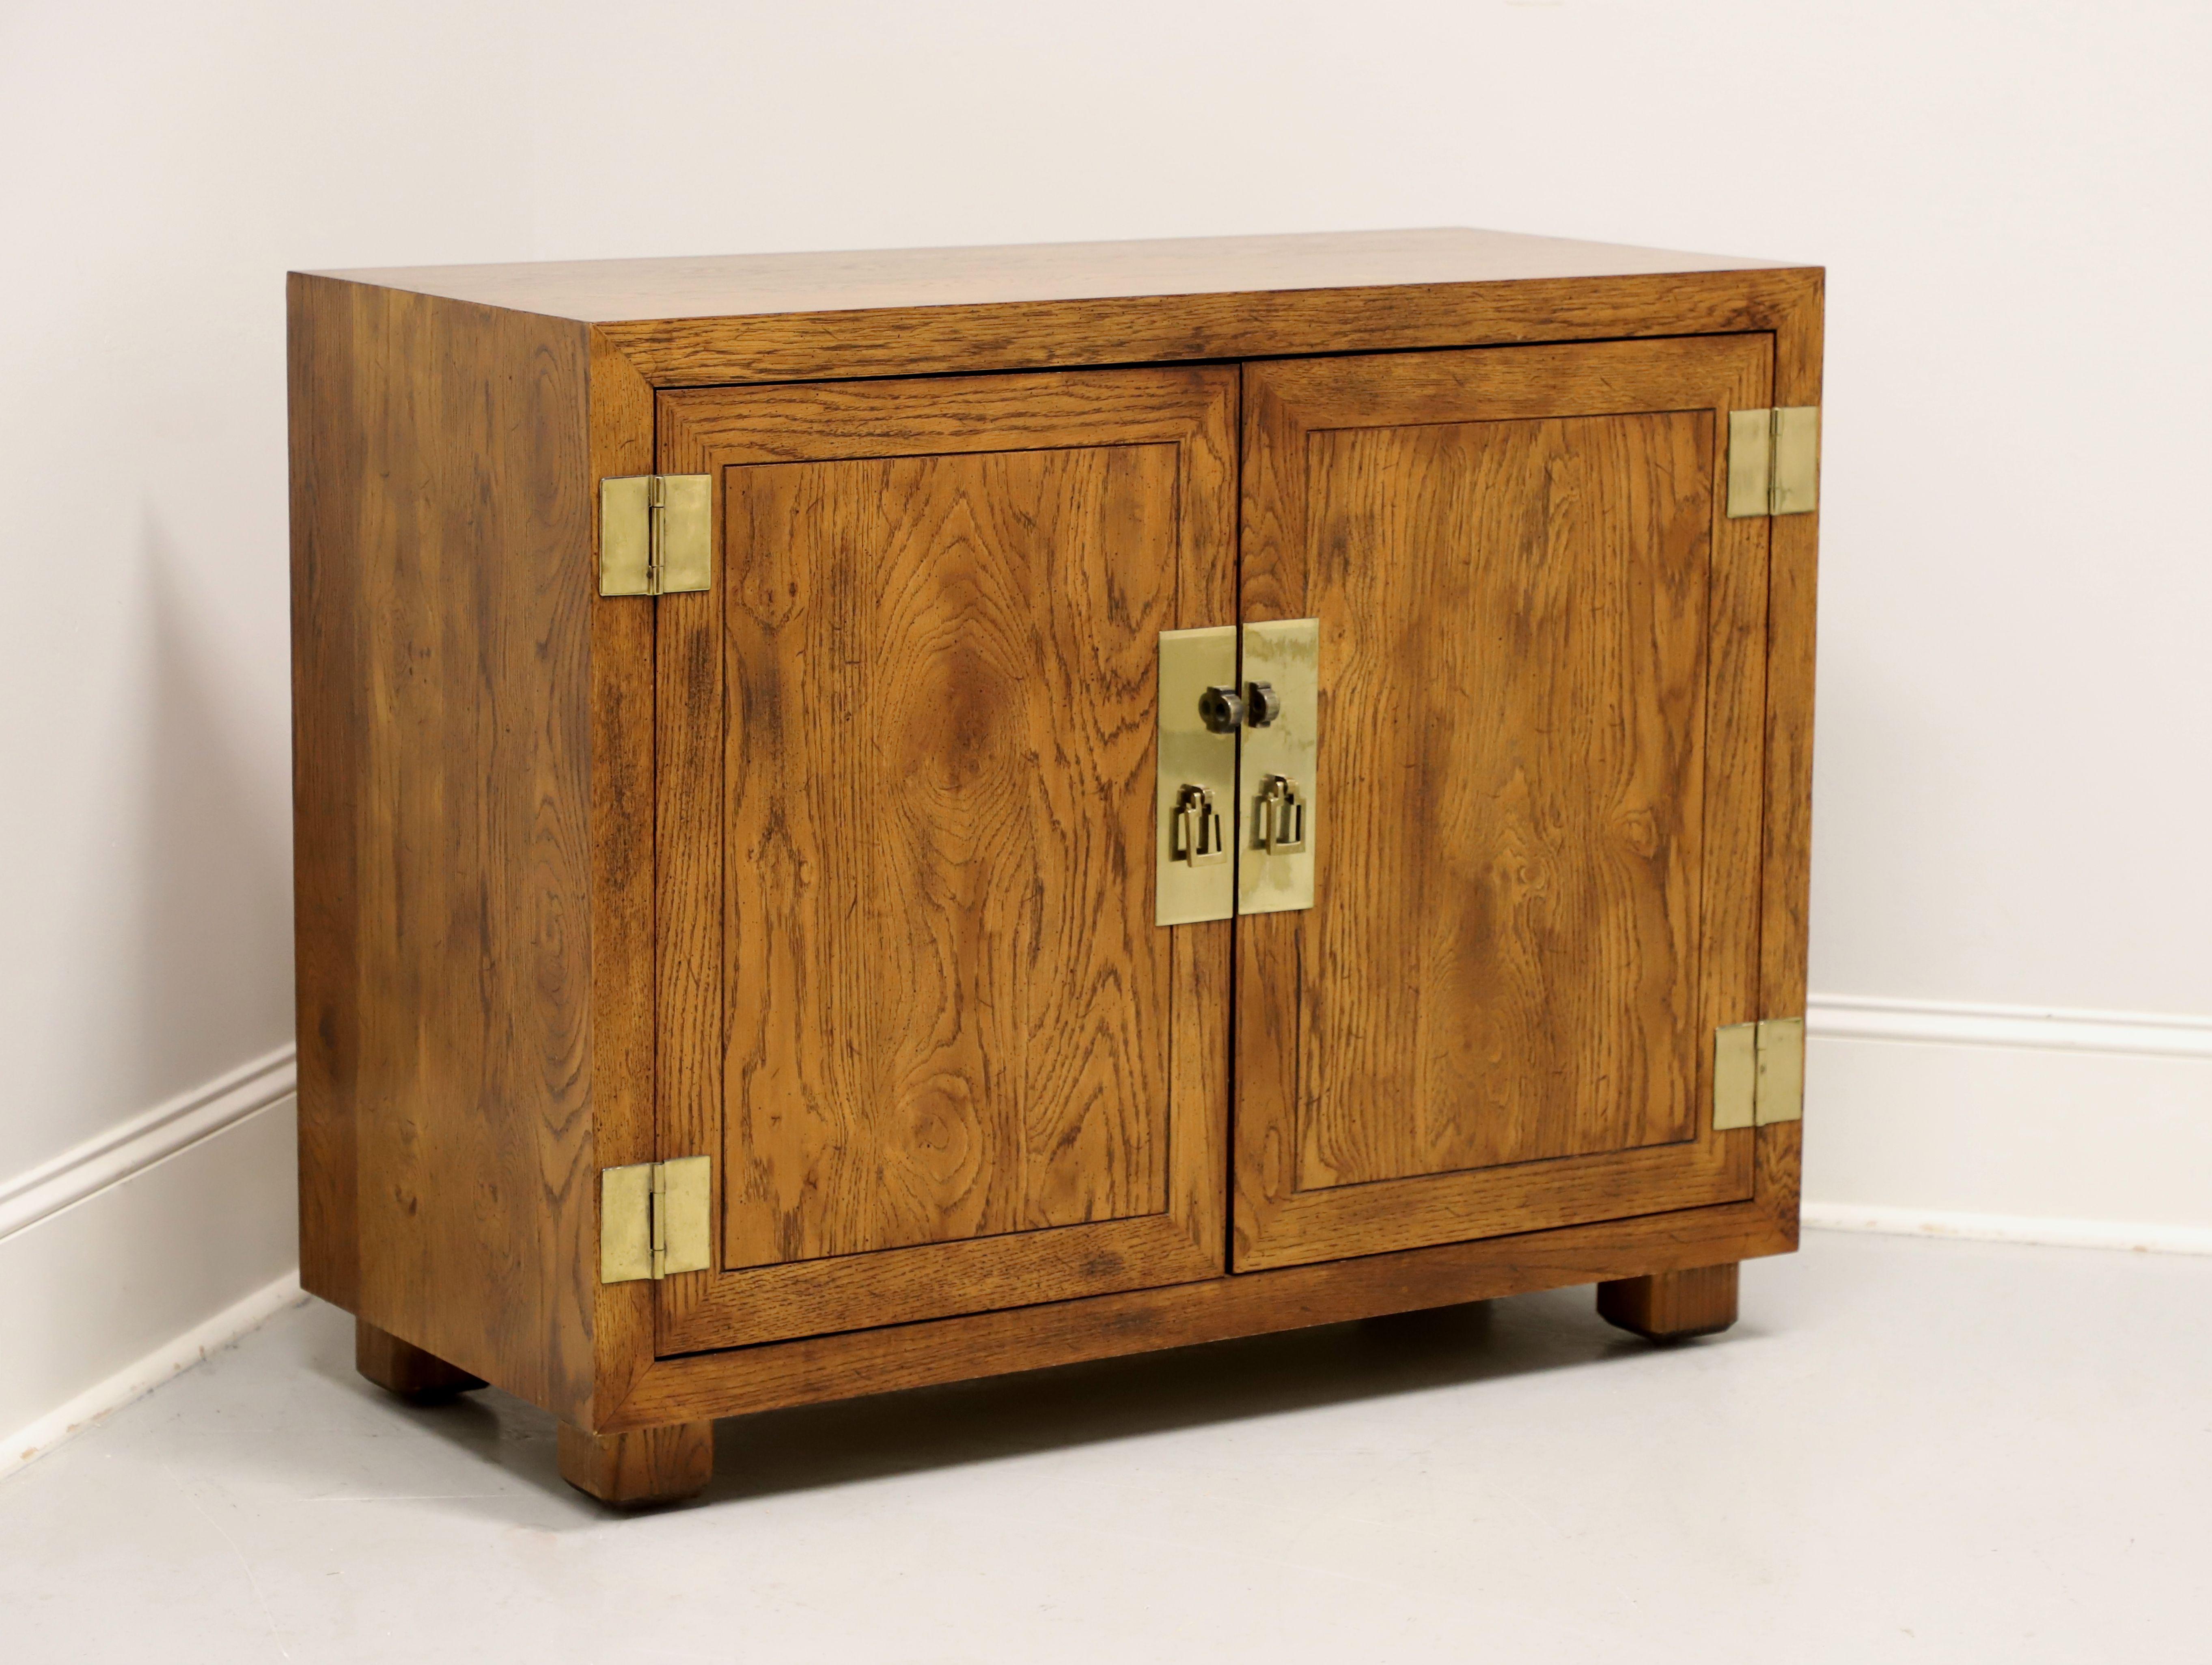 HENREDON Artefacts Knotty Oak Campaign Style Console Cabinet - A 6